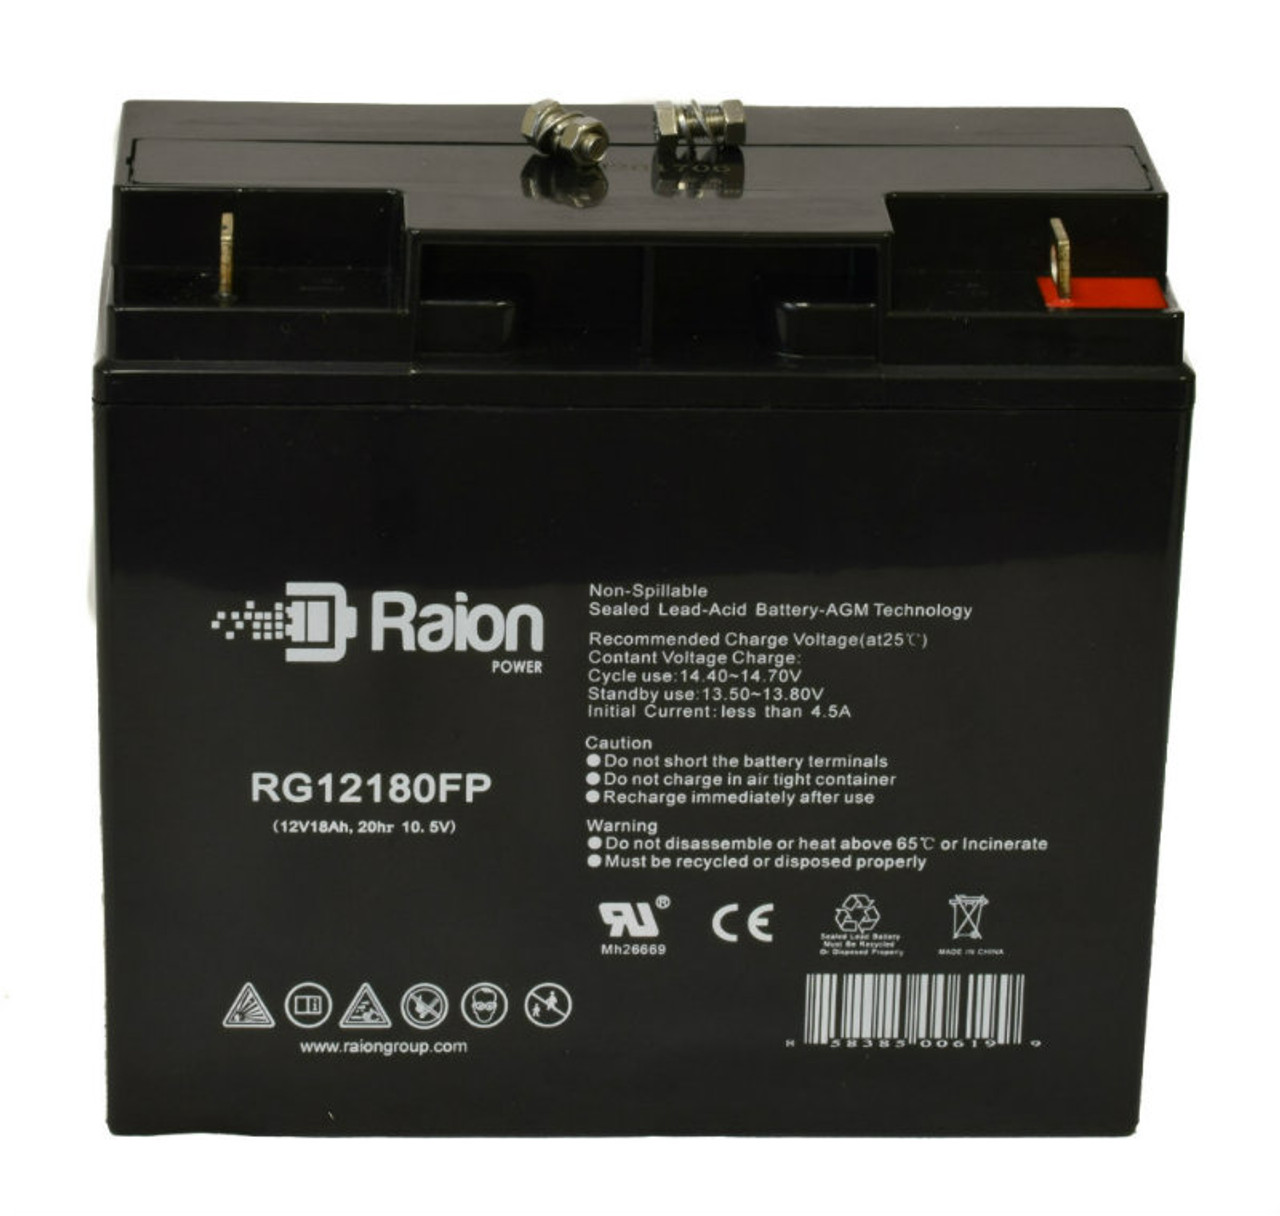 Raion Power RG12180FP 12V 18Ah Lead Acid Battery for Vasworld Power GB12-17